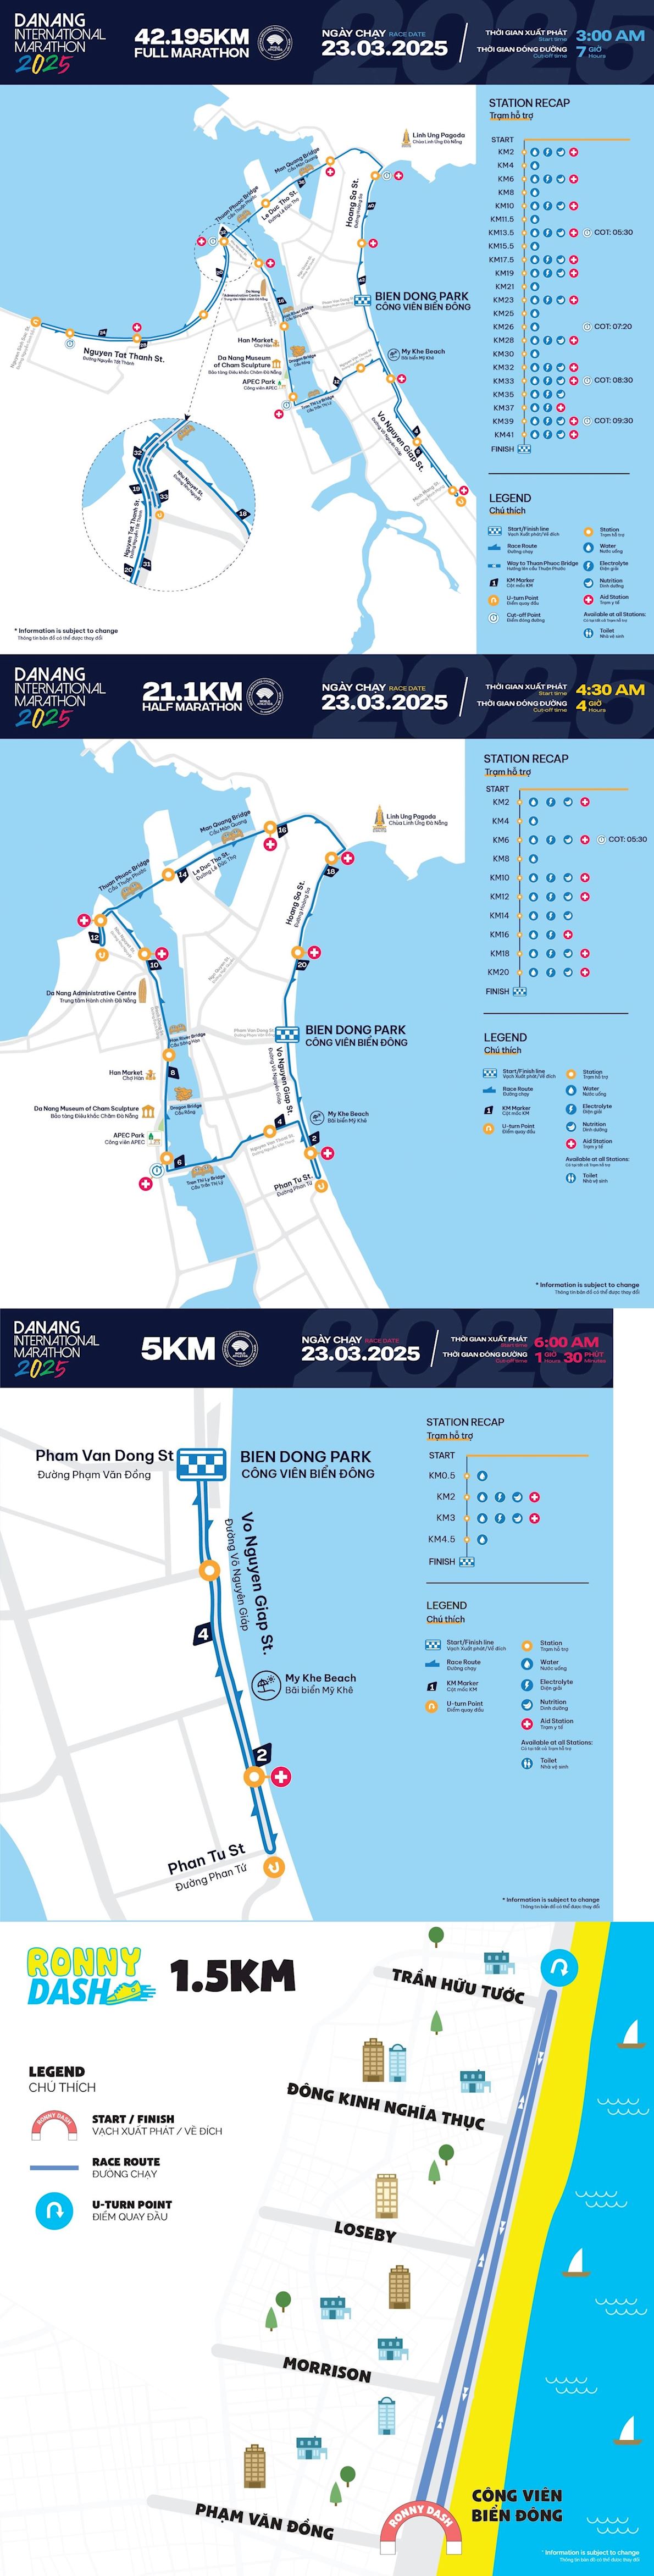 Danang International Marathon Route Map